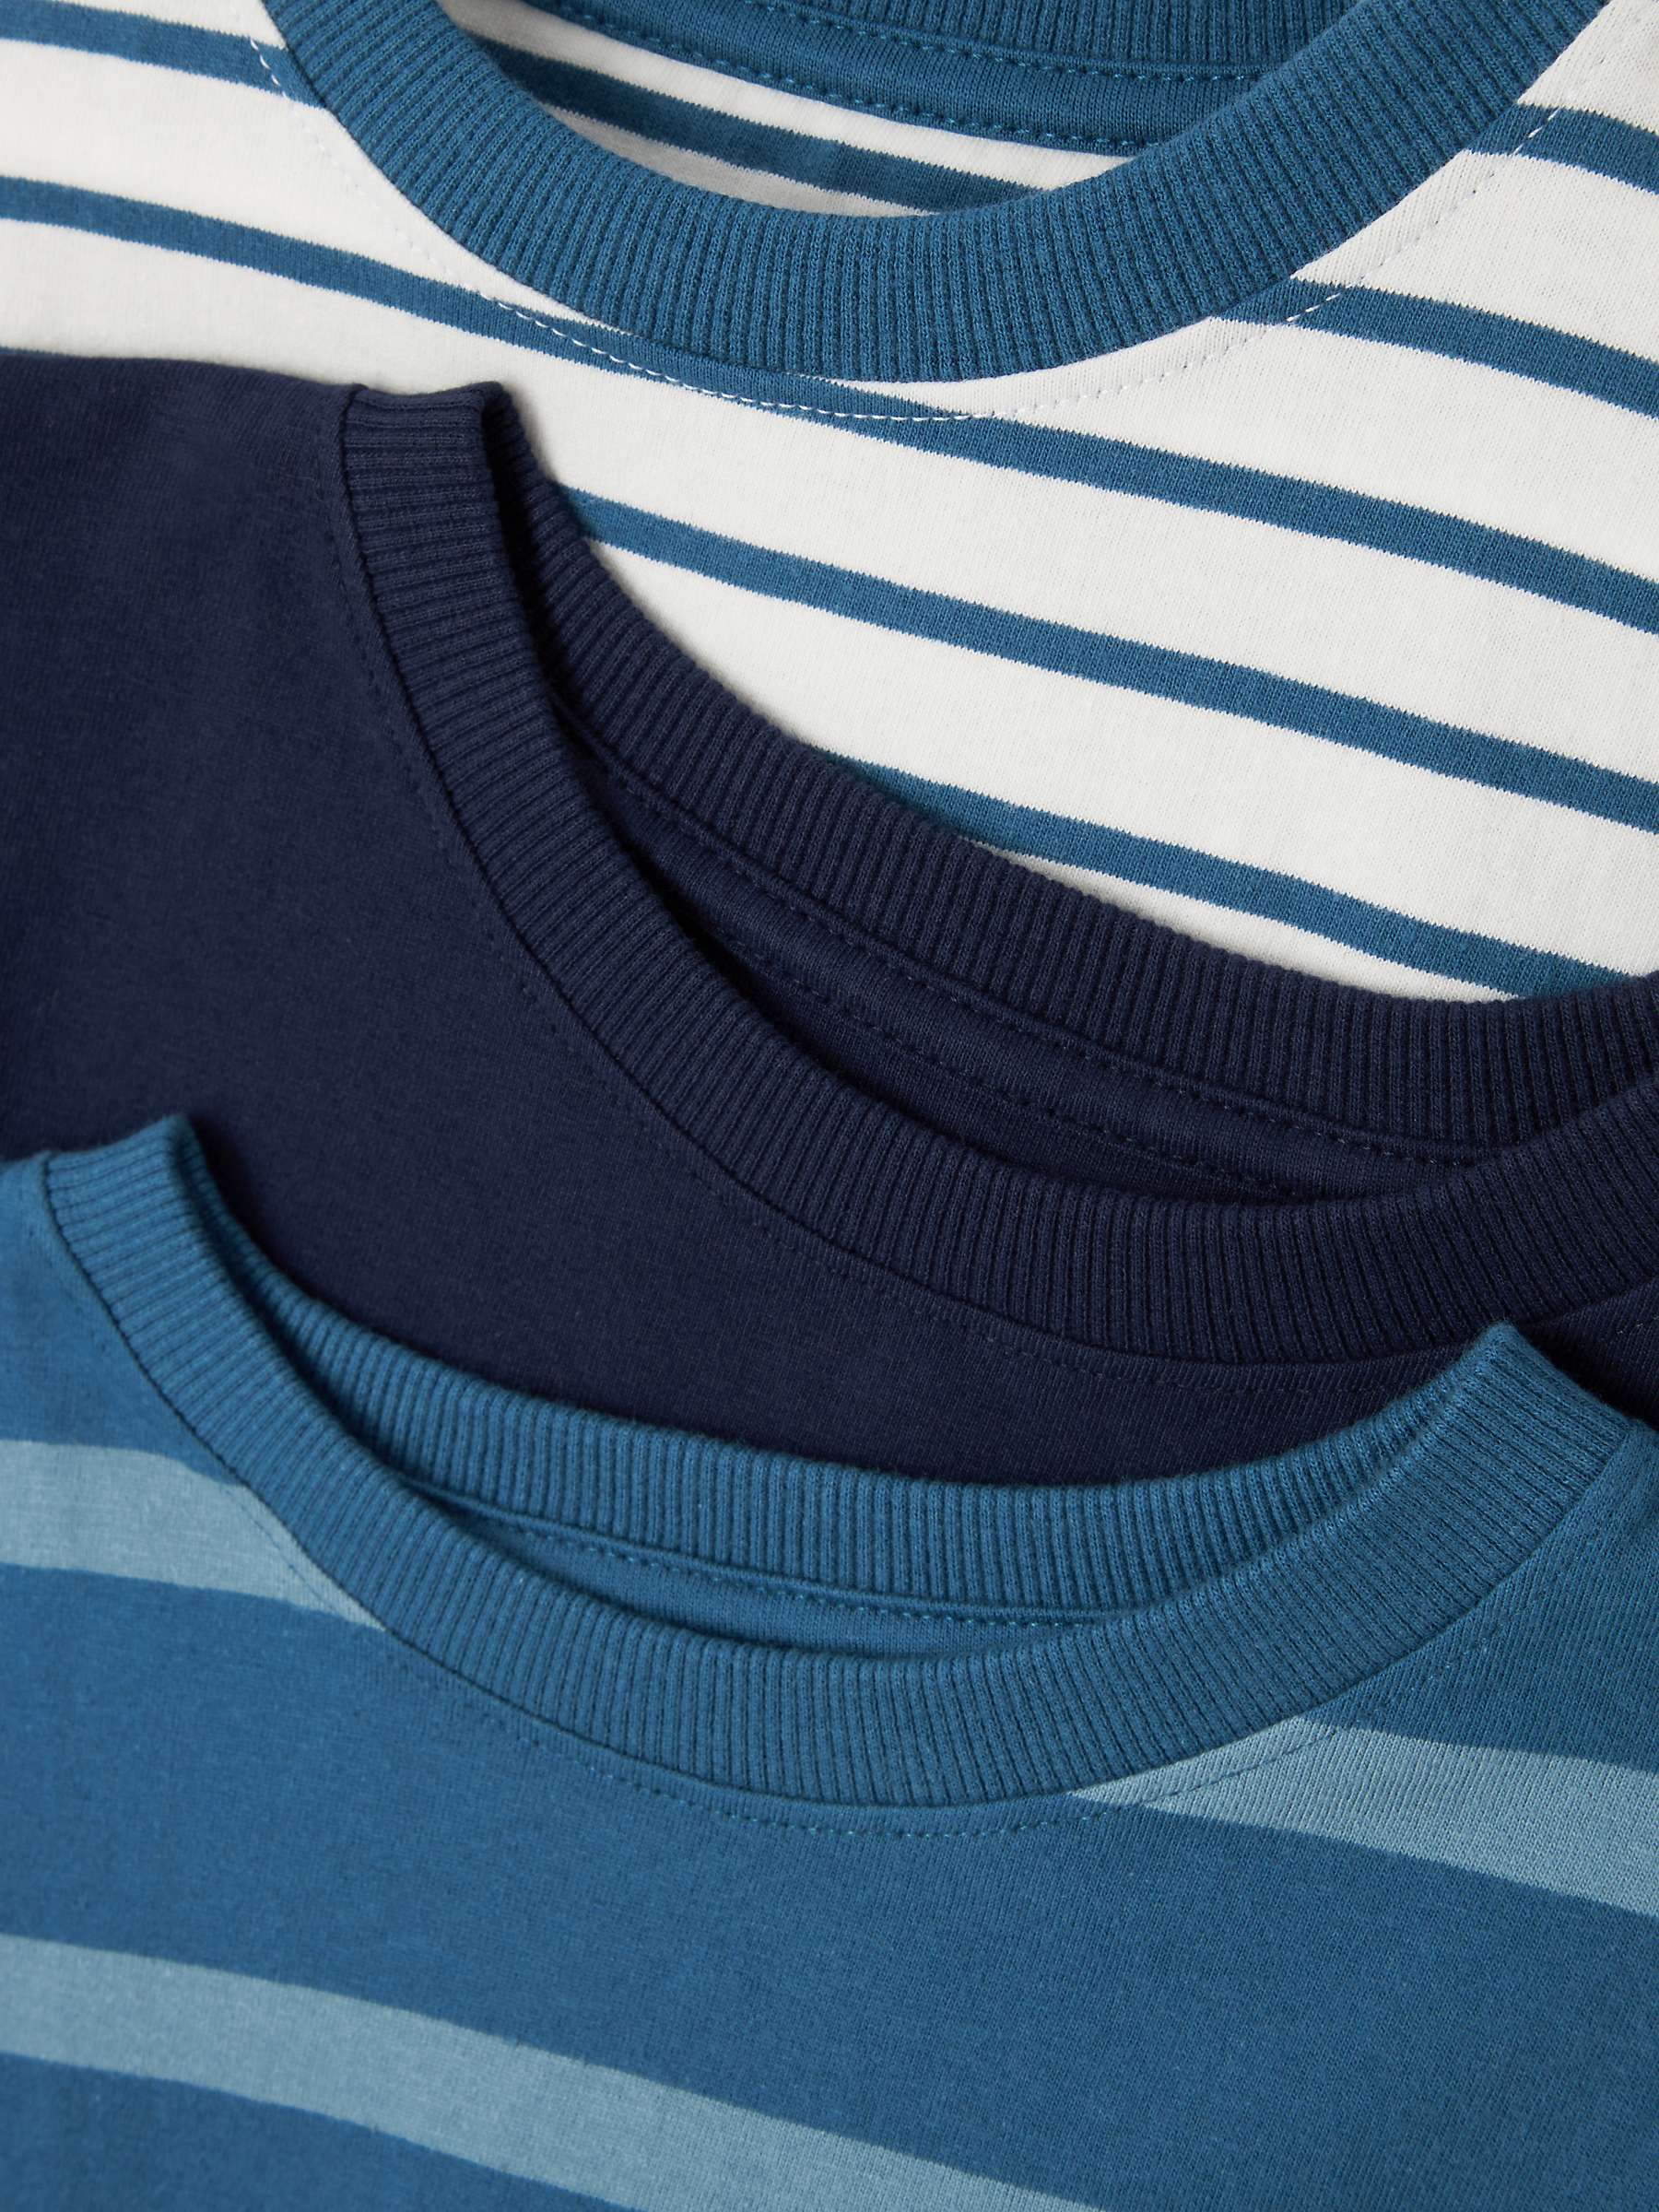 Buy John Lewis Kids' Plain/Stripe T-Shirts, Pack of 3, Blue/Multi Online at johnlewis.com